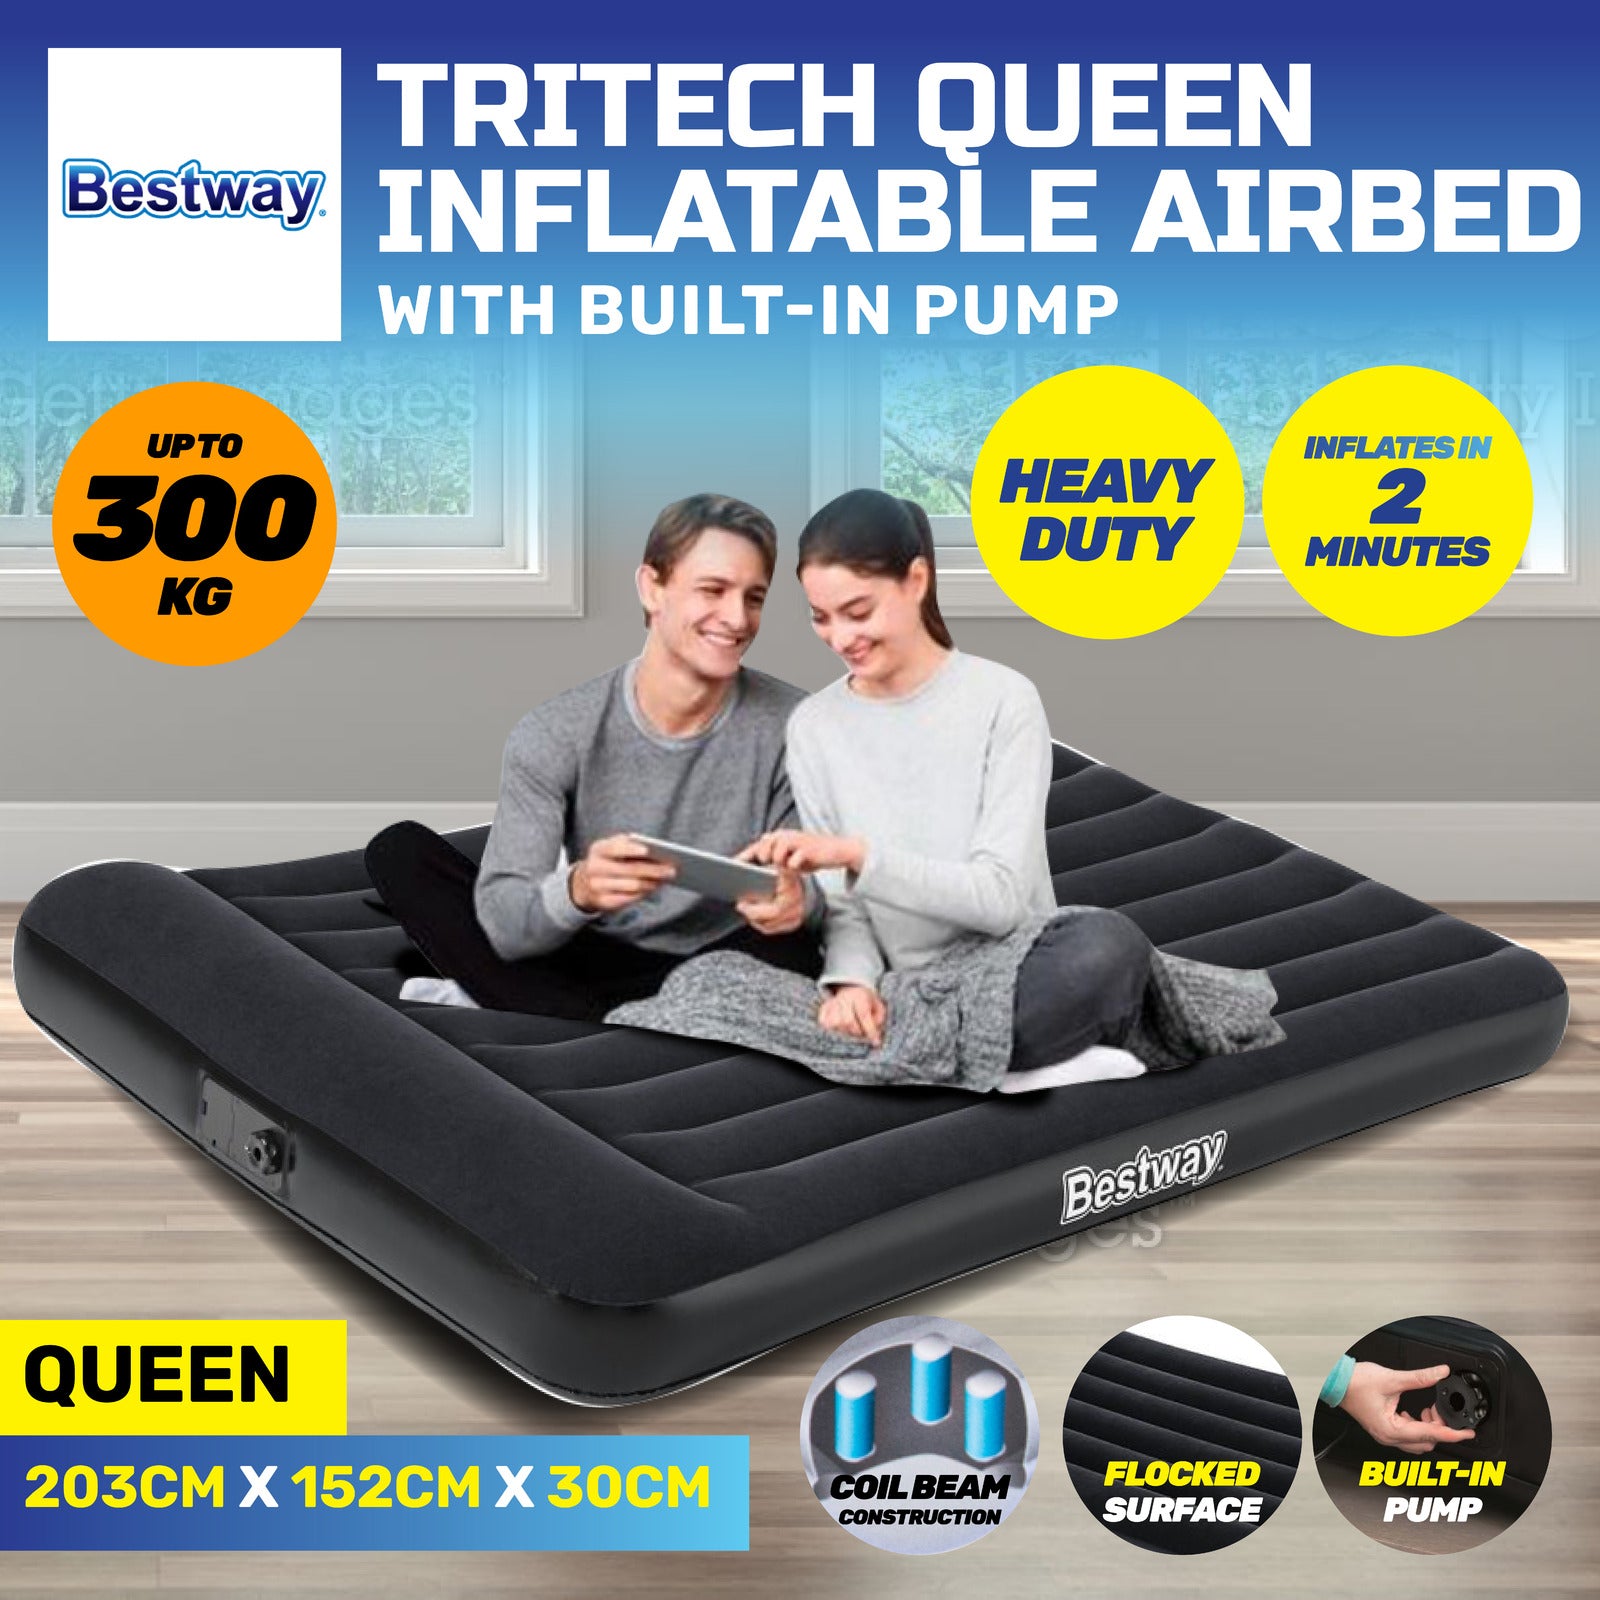 Bestway Queen Inflatable Air Bed Tritech Built-In Pump Heavy Duty